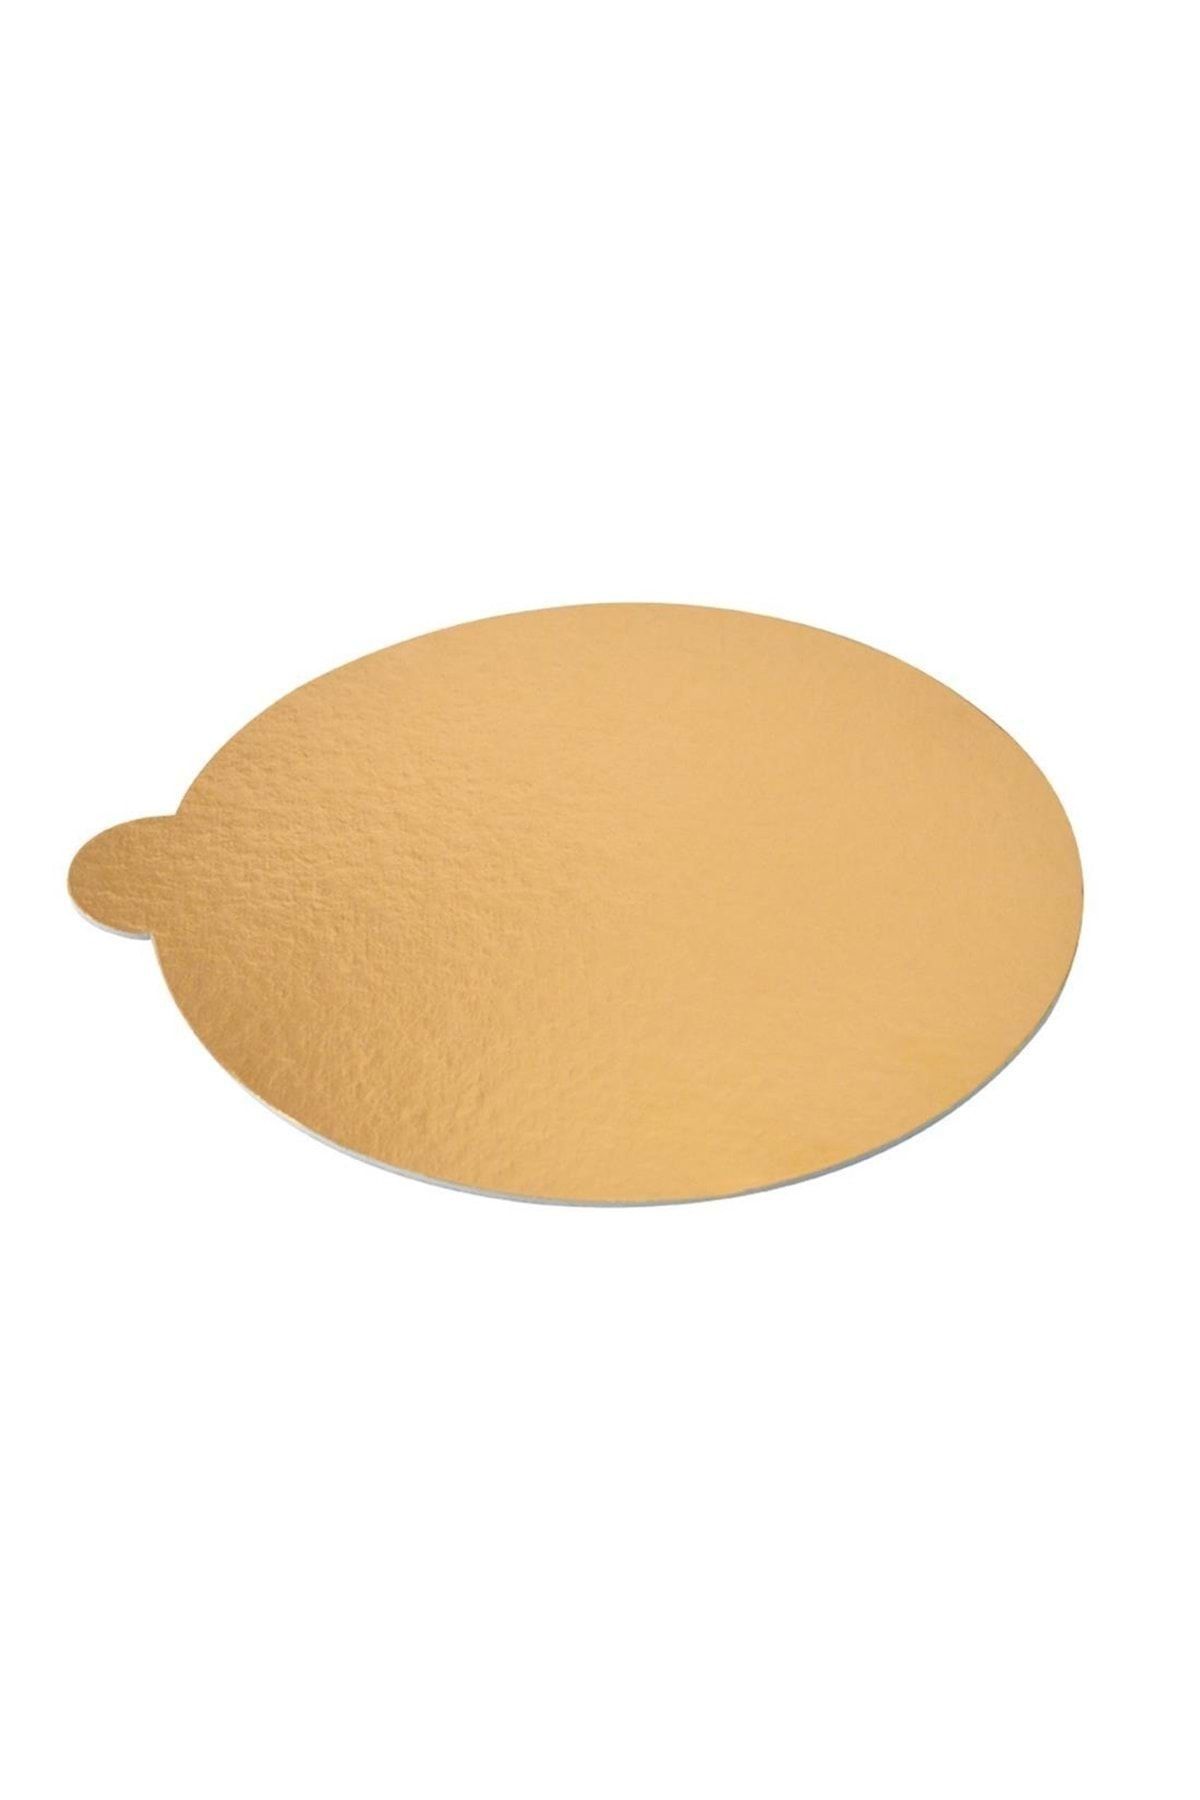 BENS Gold Pasta Altı  No:3 28 cm  25'li